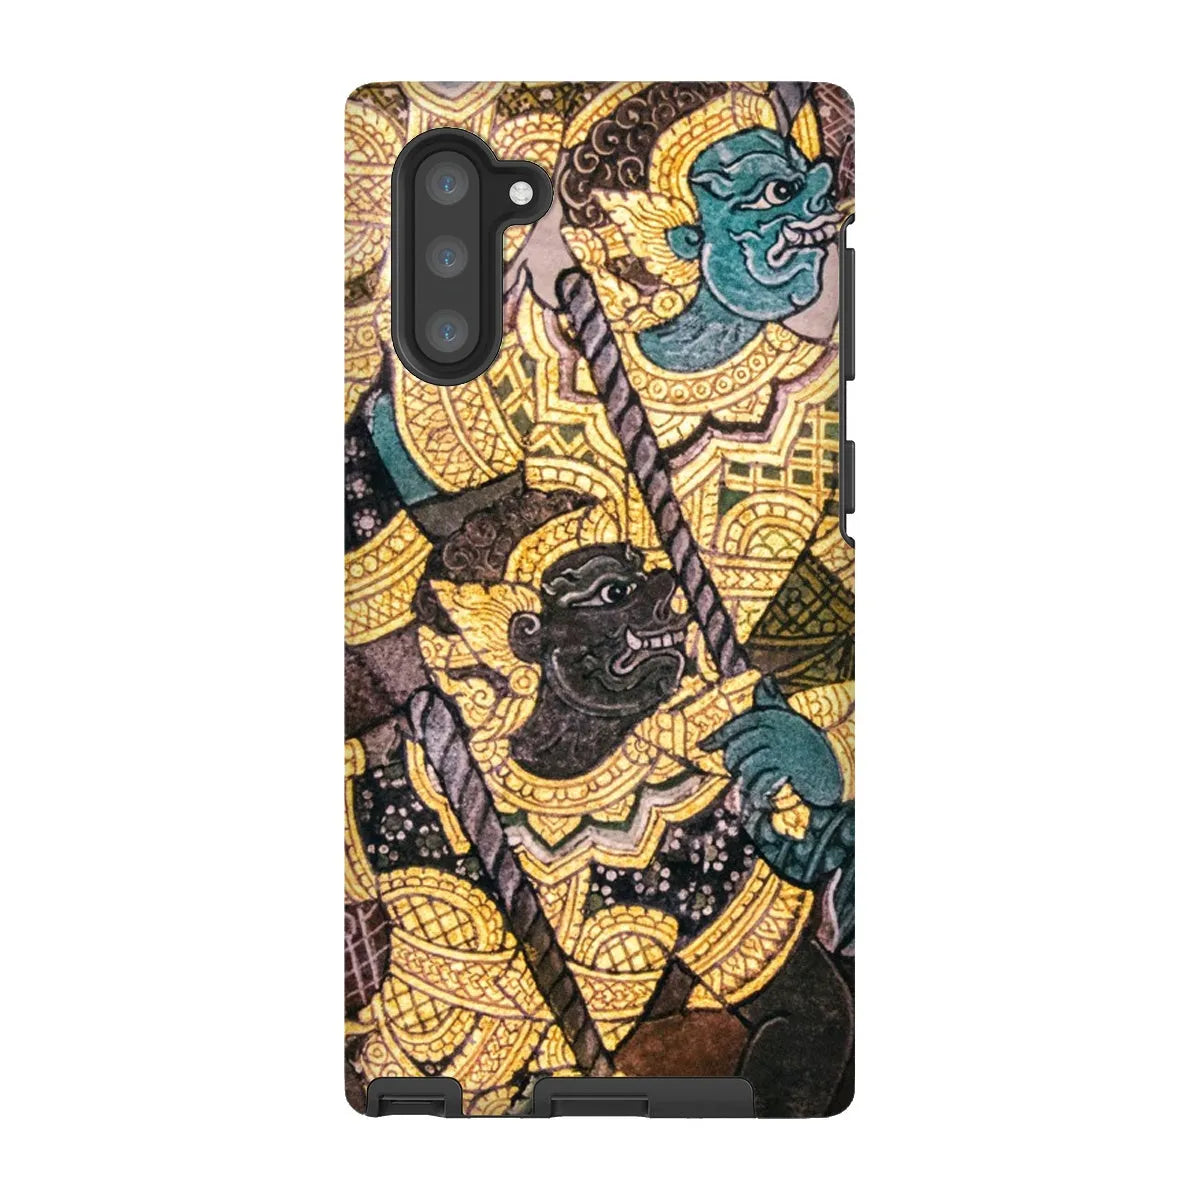 Action Men - Ancient Thai Temple Art Phone Case - Samsung Galaxy Note 10 / Matte - Mobile Phone Cases - Aesthetic Art